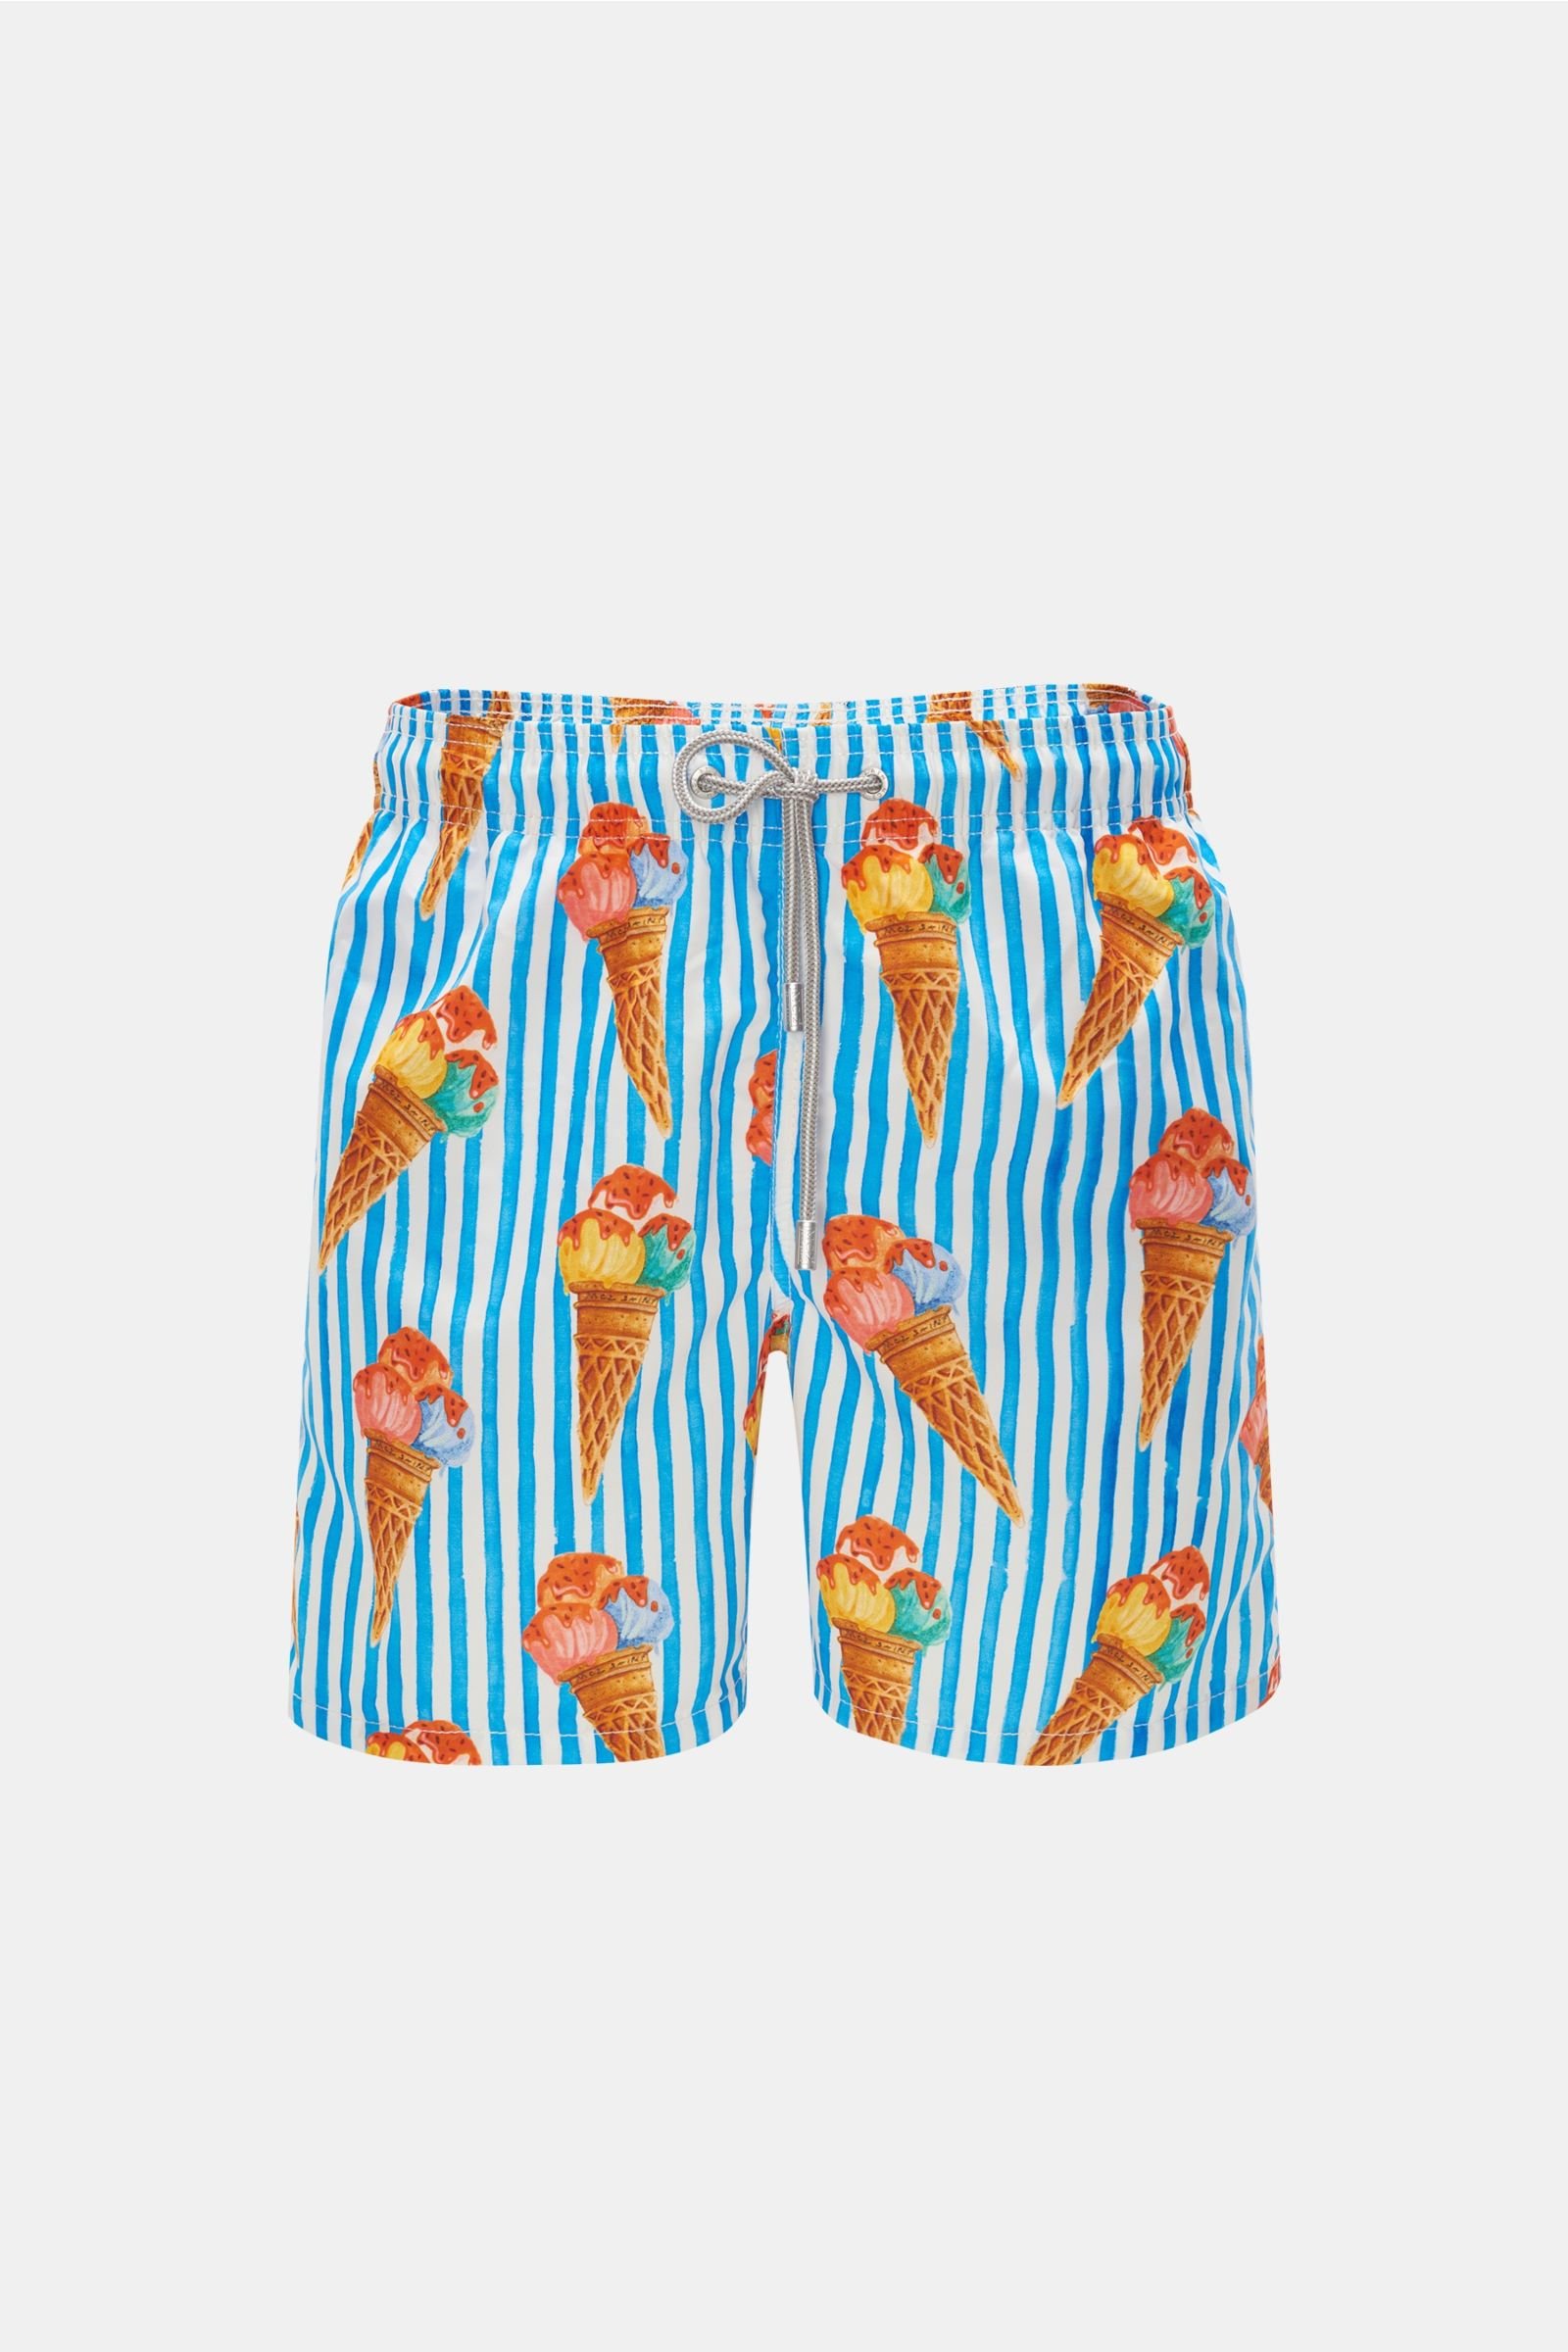 Swim shorts blue/white patterned